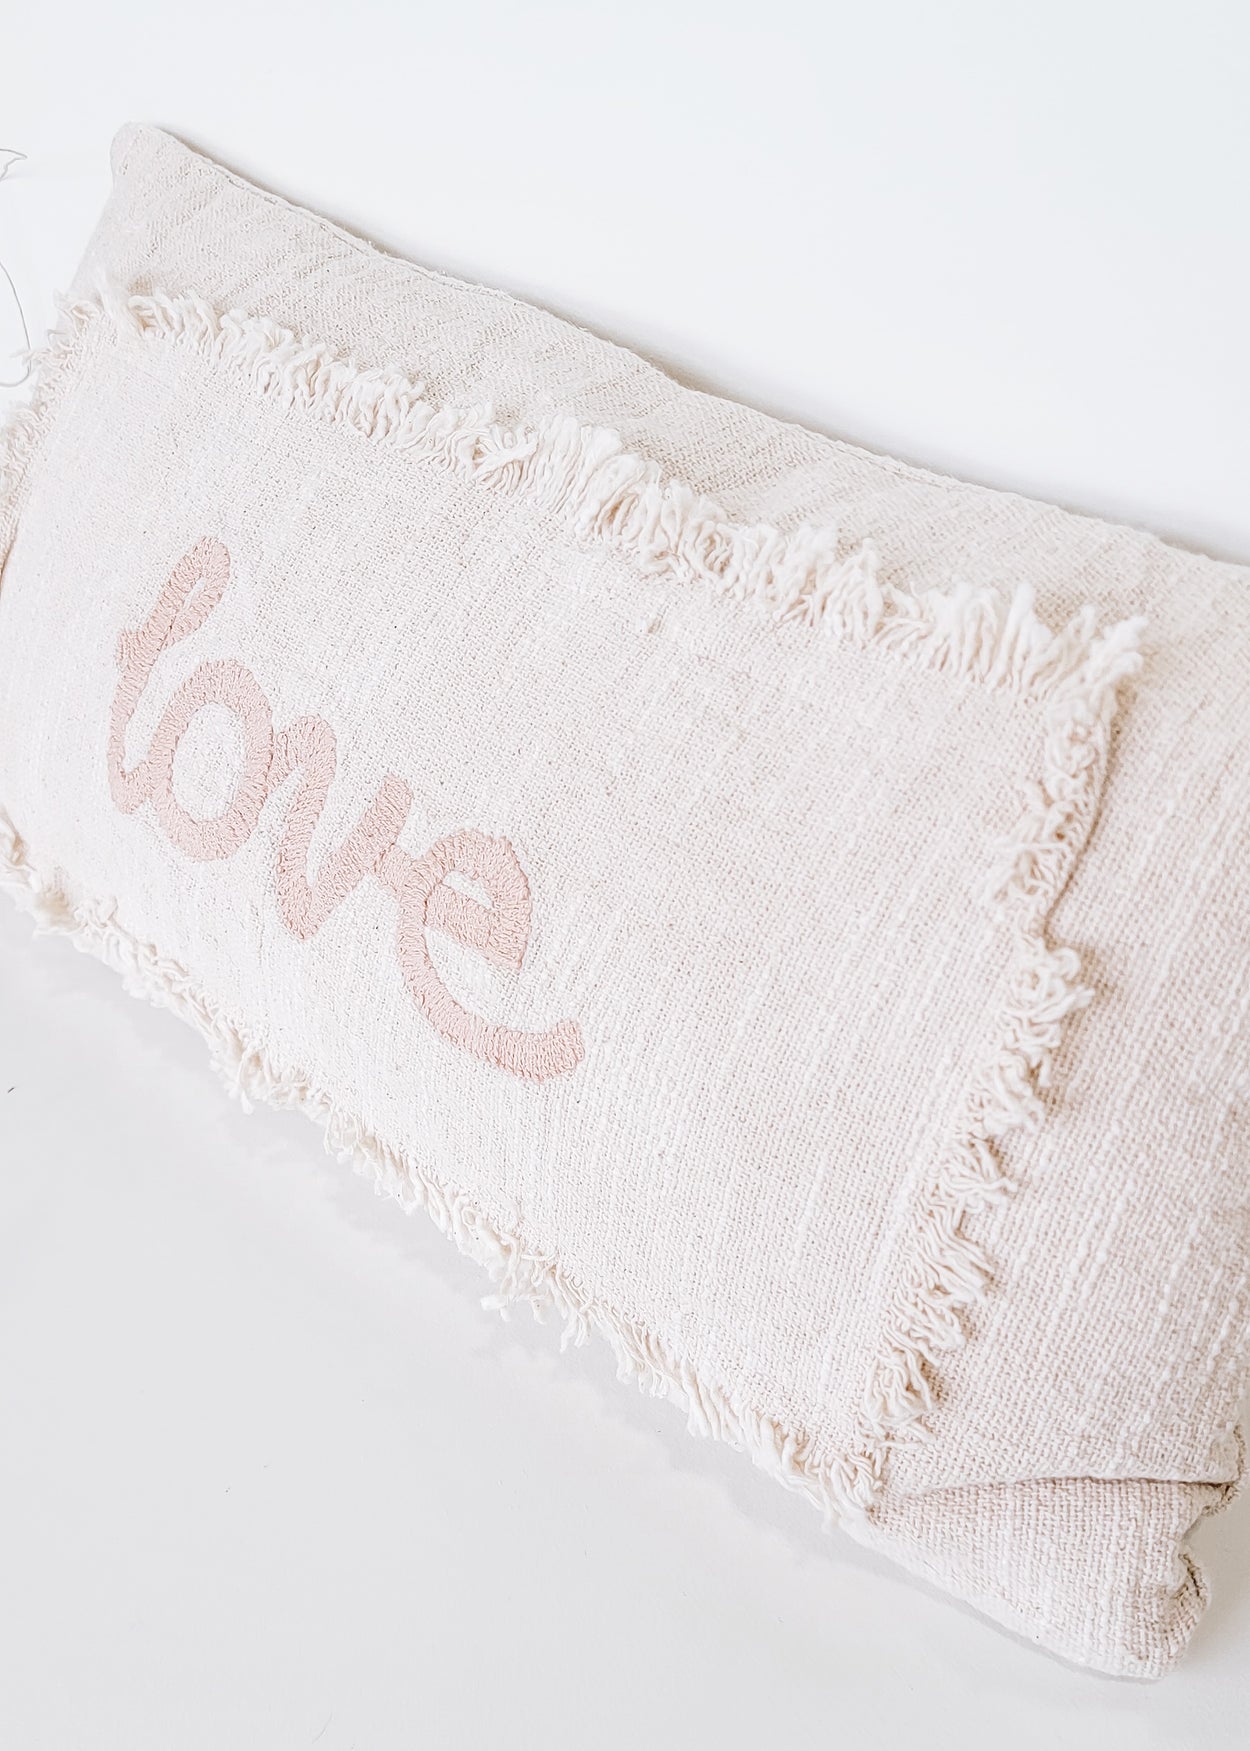 Cotton Embroidered Lumbar "LOVE" Pillow